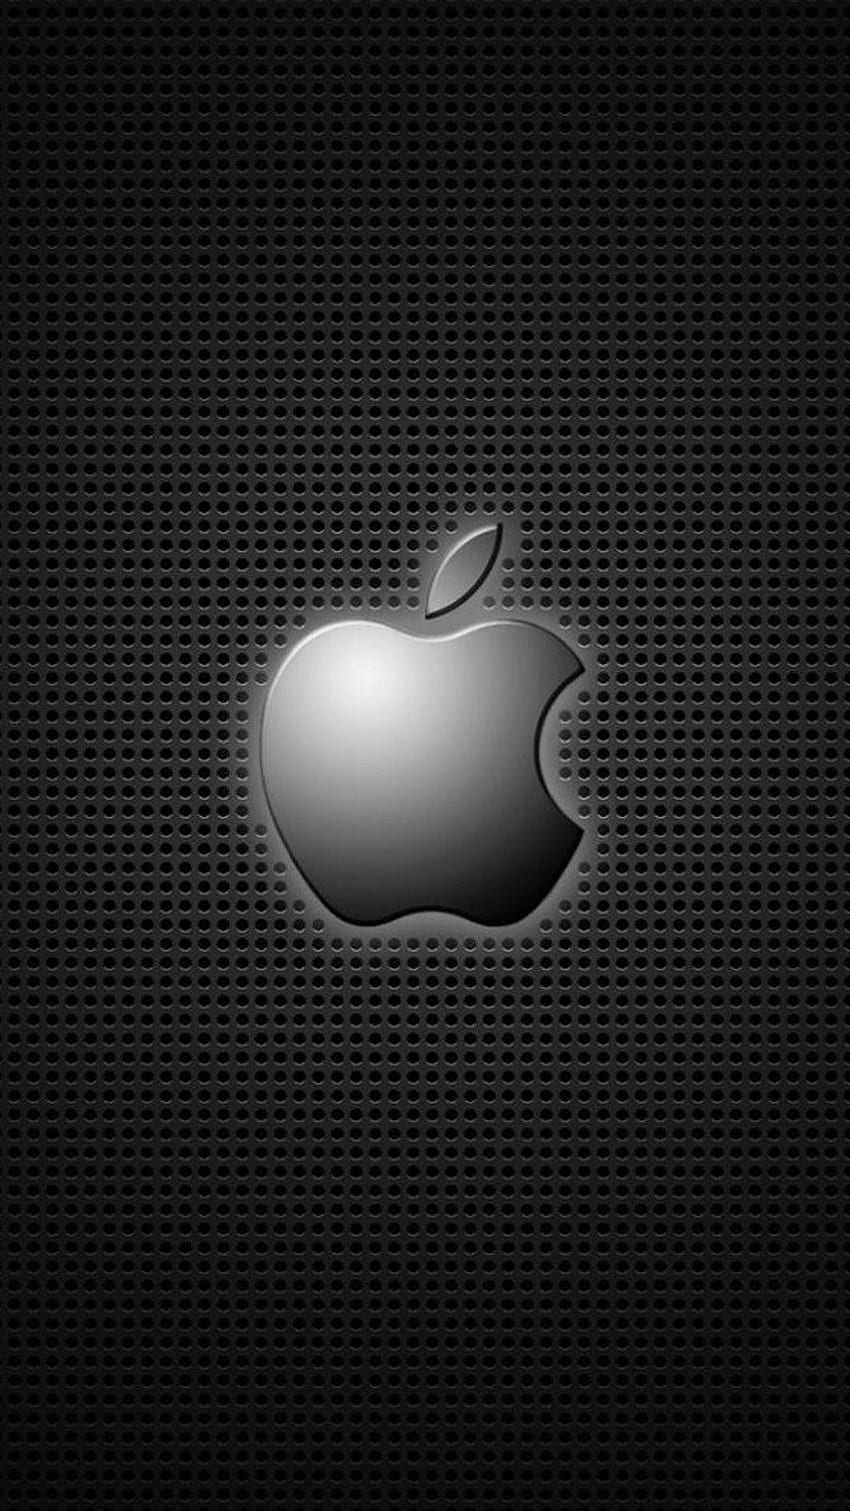 iPhone 7 Plus Apple HD phone wallpaper